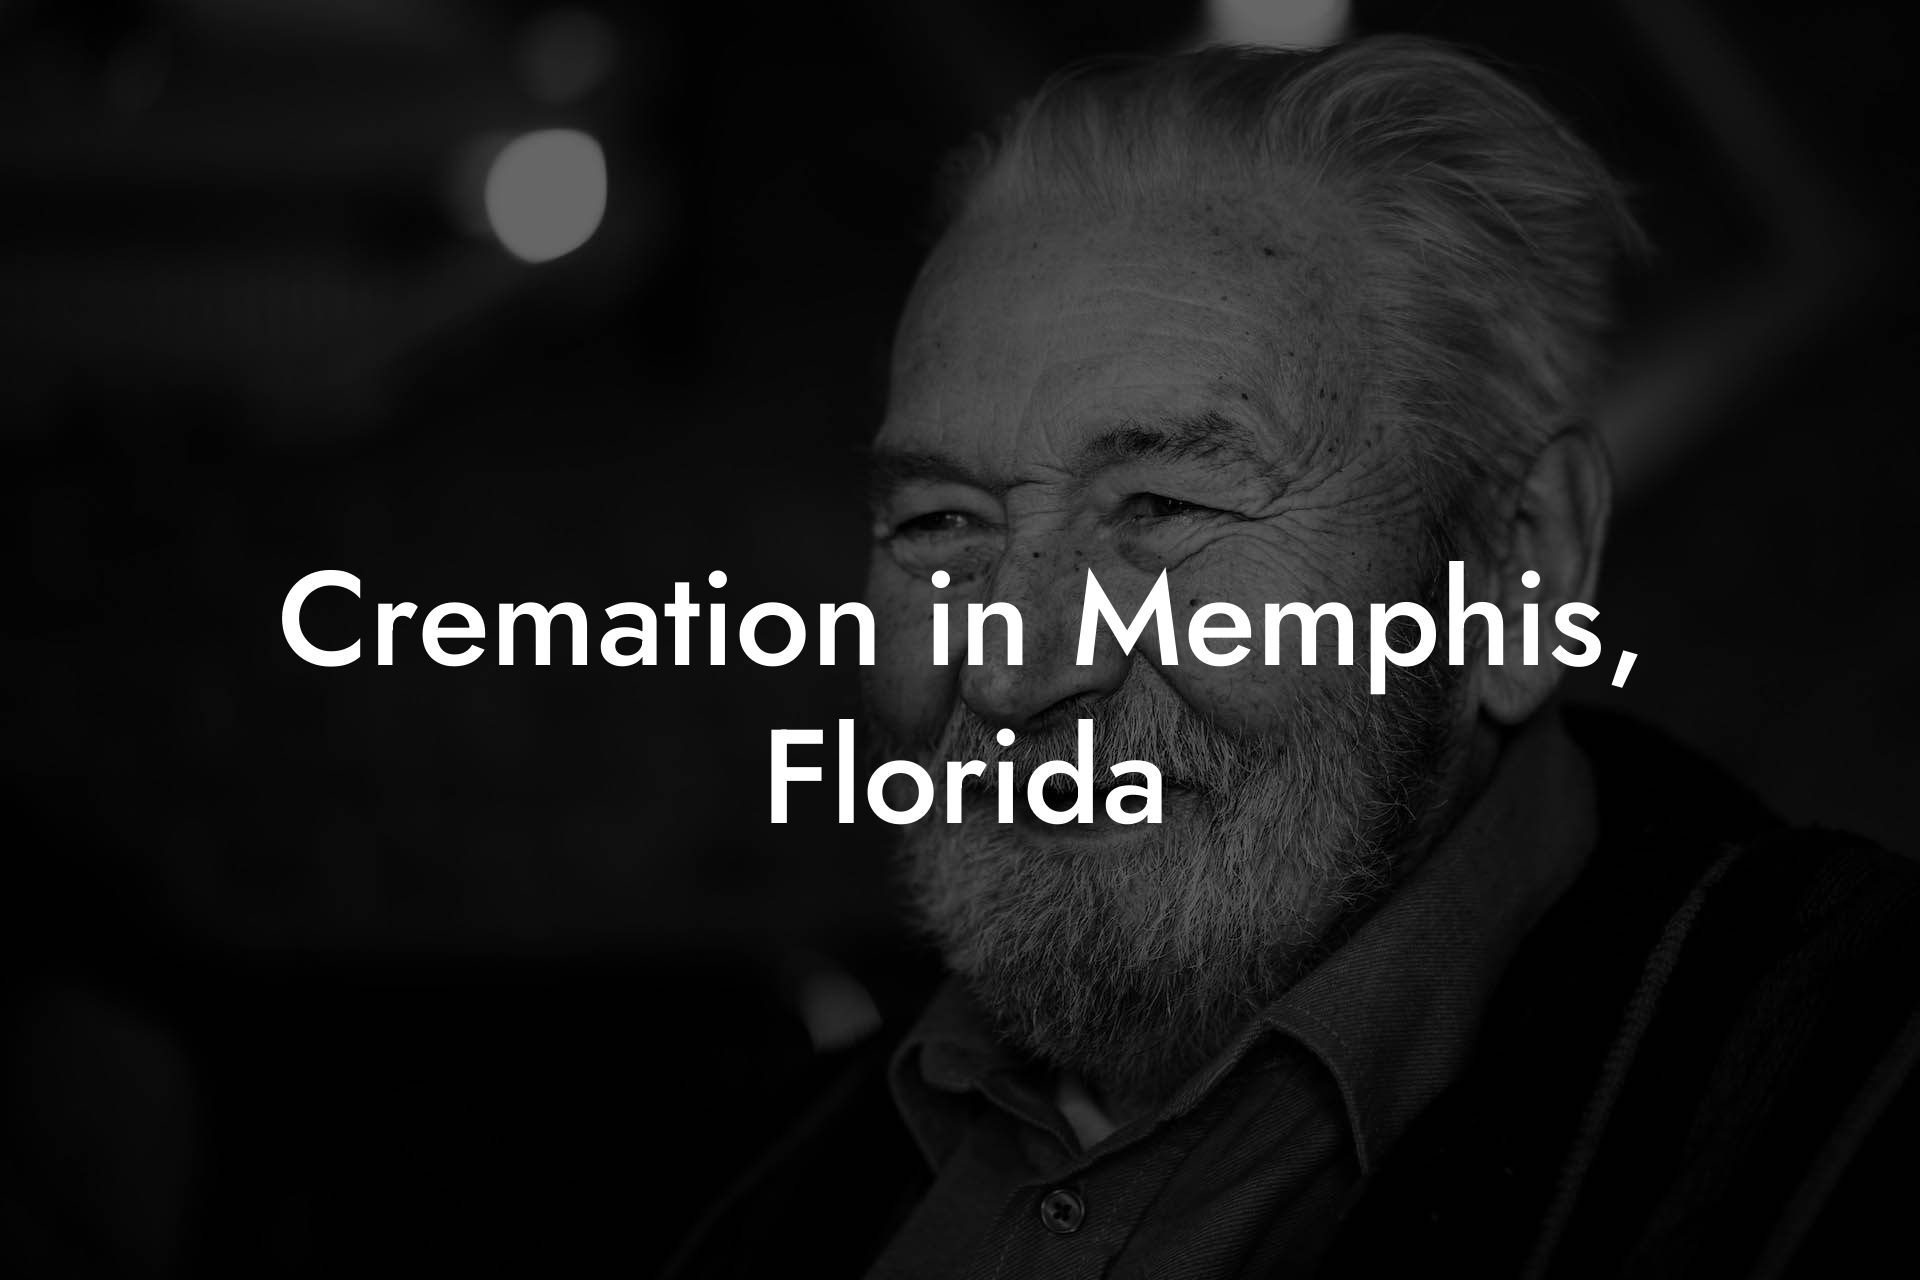 Cremation in Memphis, Florida